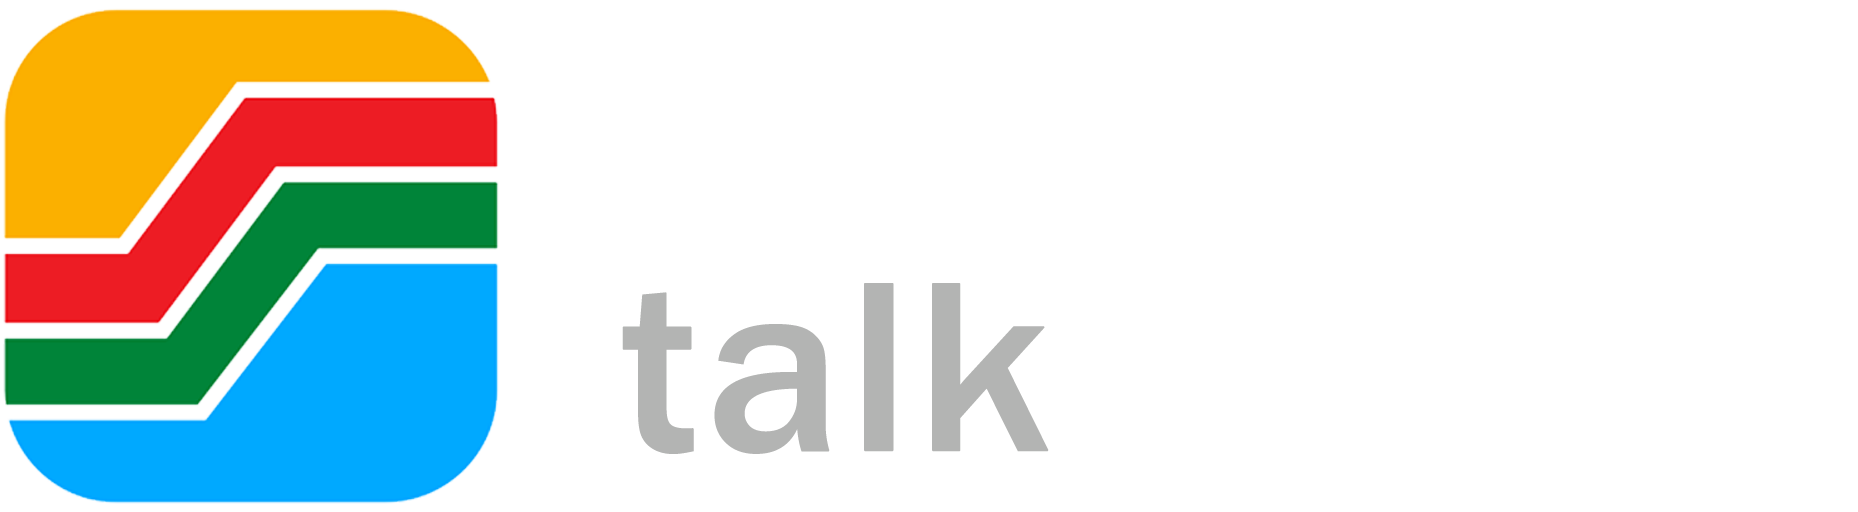 ProTABS Talk